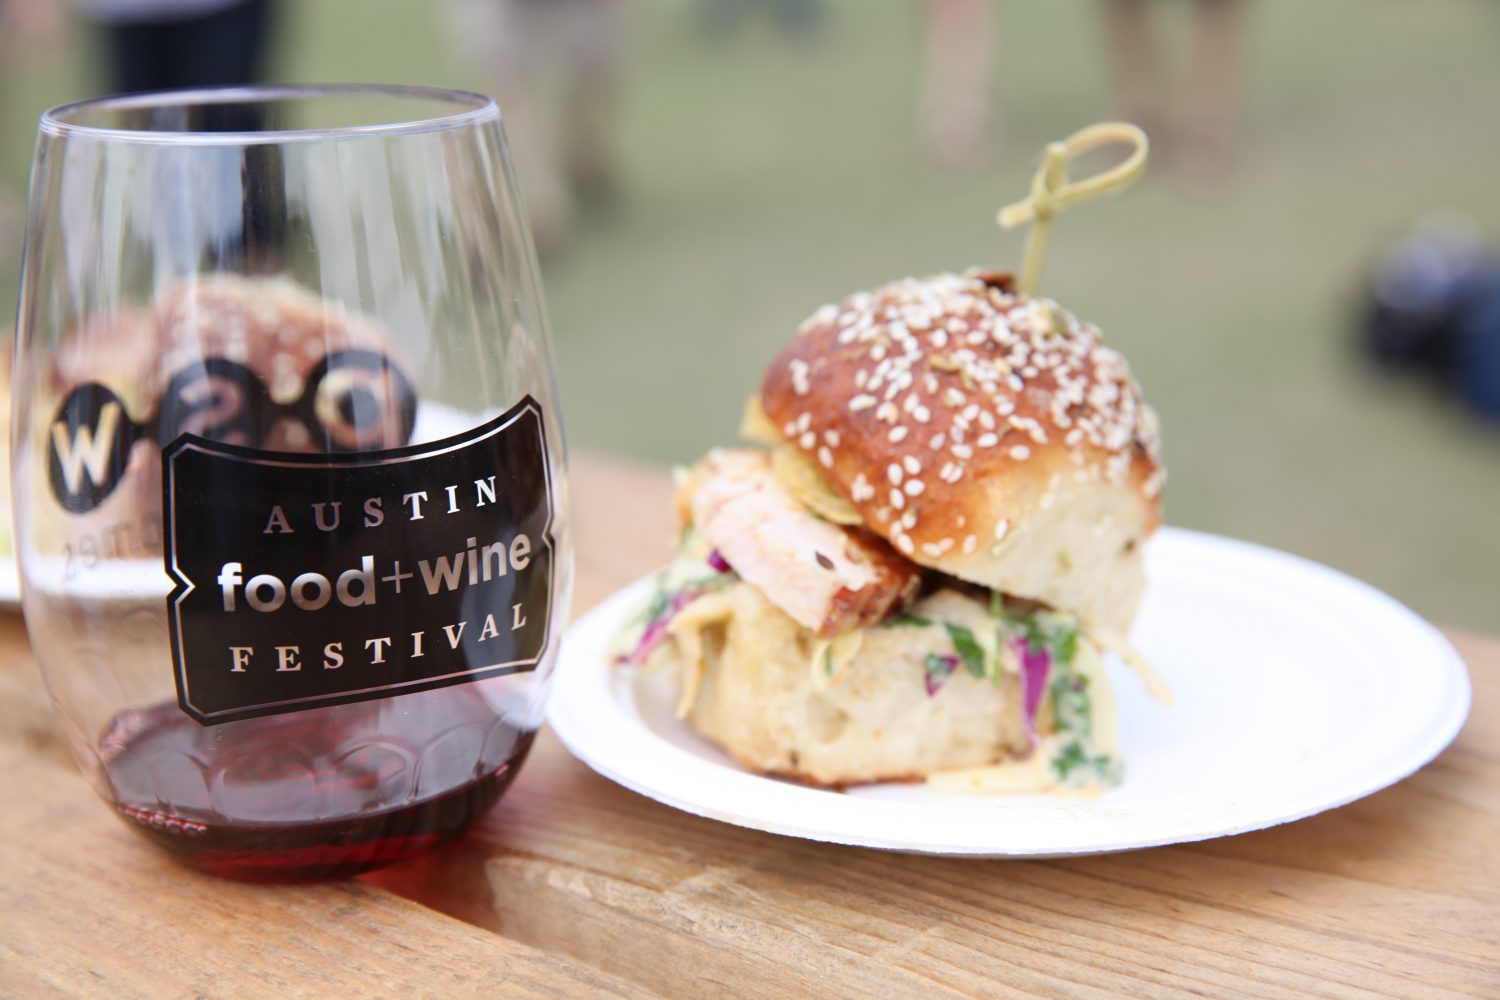 Austin food and wine festival